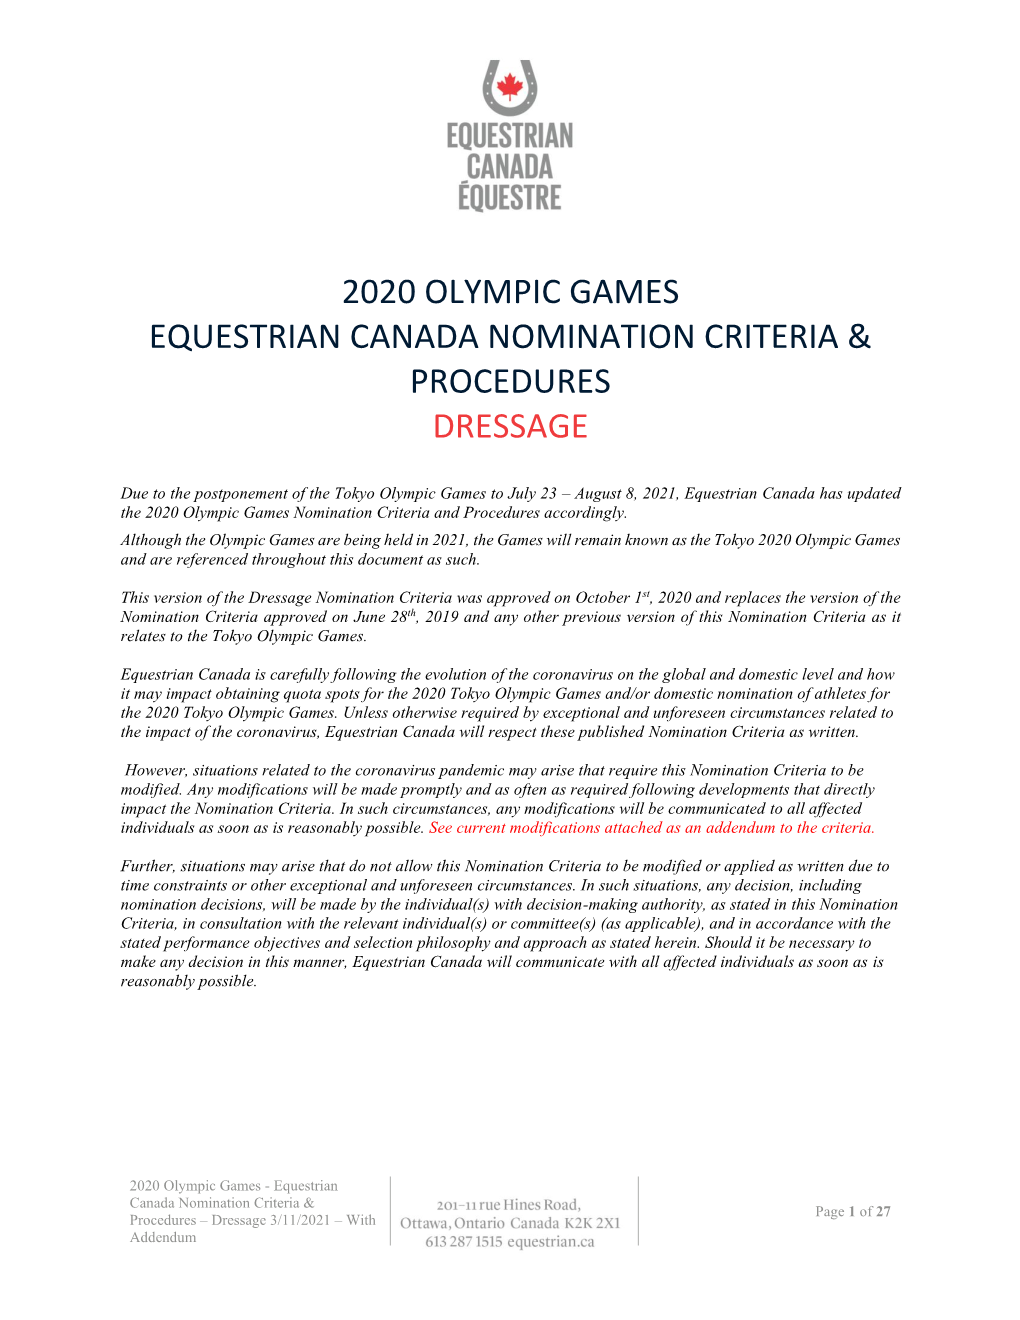 2020 Olympic Games Equestrian Canada Nomination Criteria & Procedures Dressage